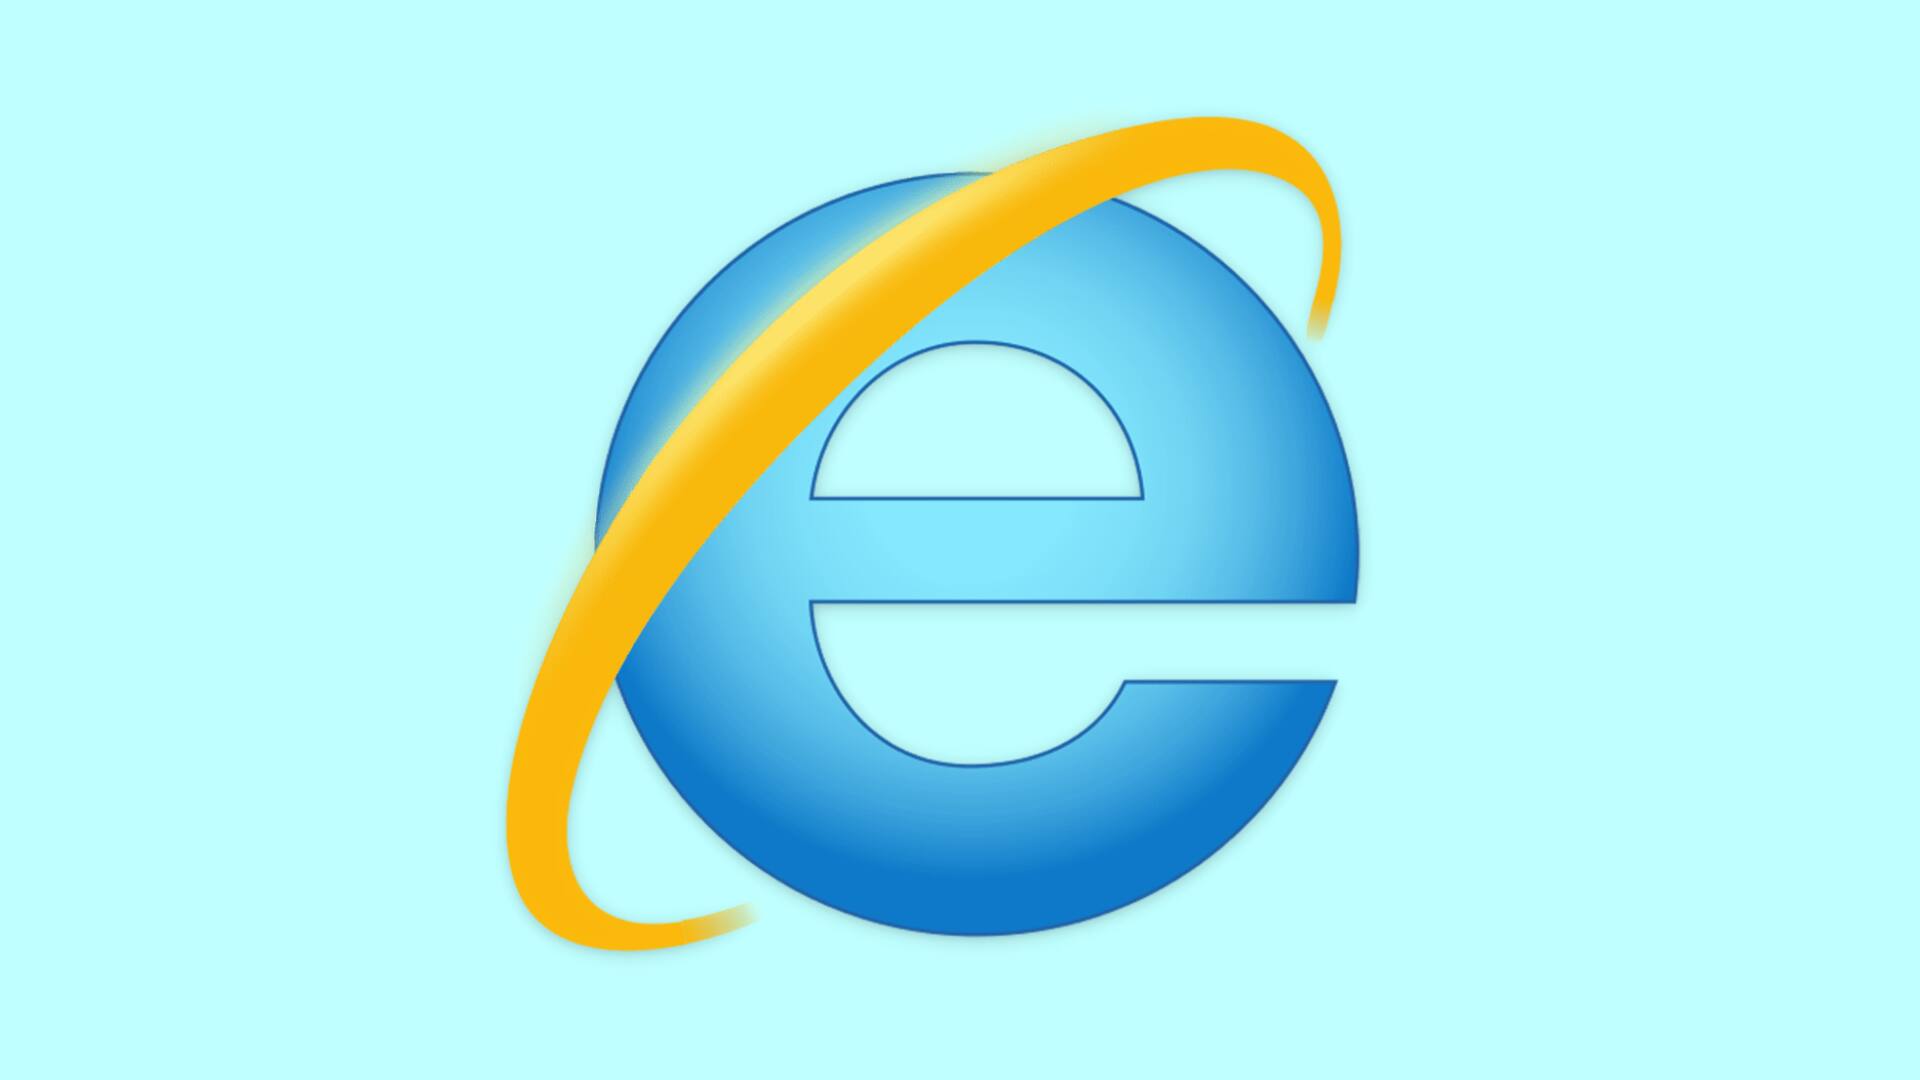 Starting tomorrow, Internet Explorer will redirect you to Microsoft Edge